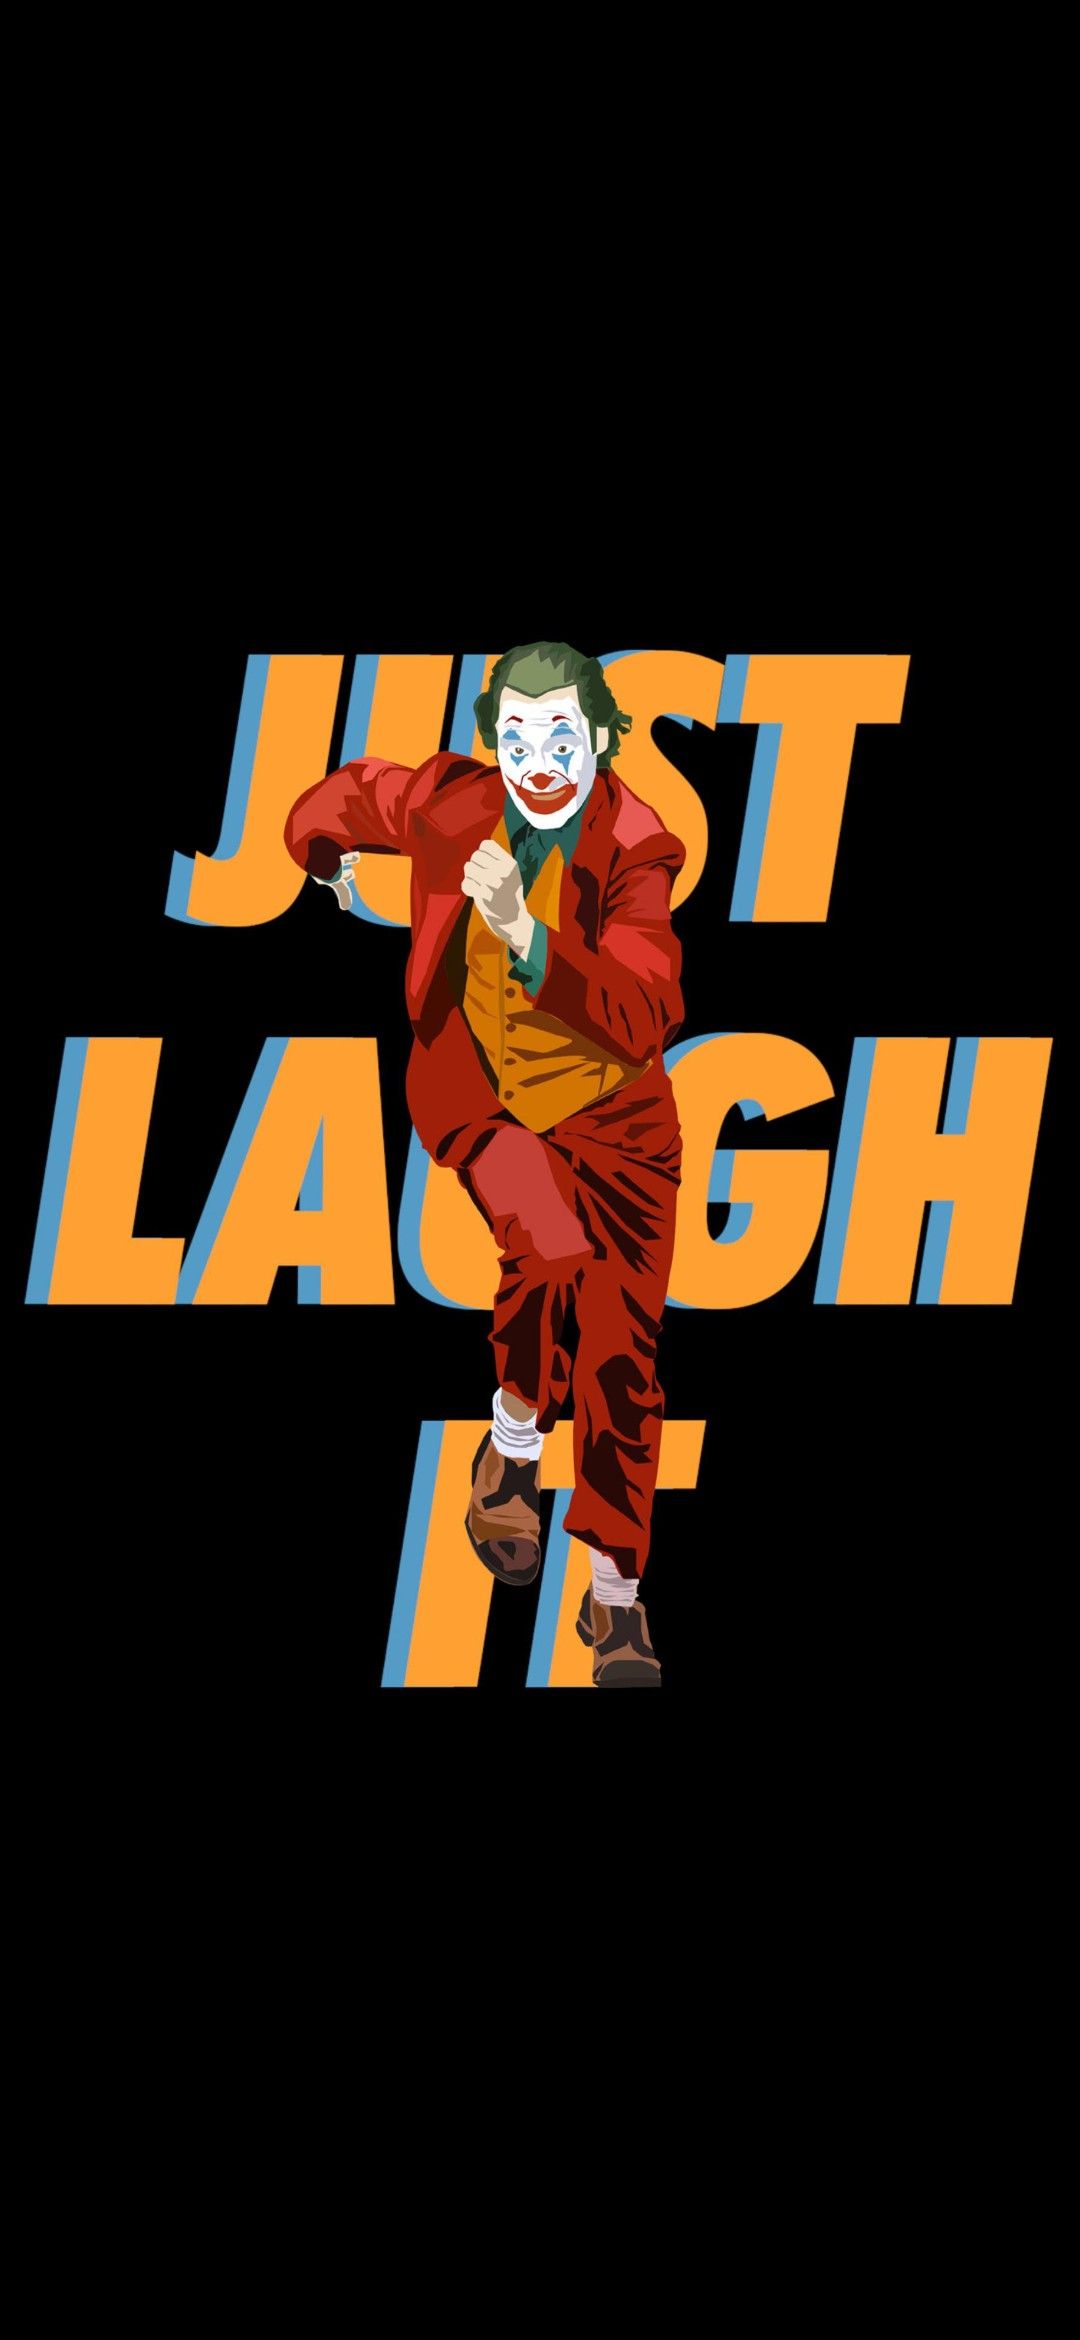 Joker Movie Quotes Dark HD Wallpaper Download for iPhone ⋆ Traxzee